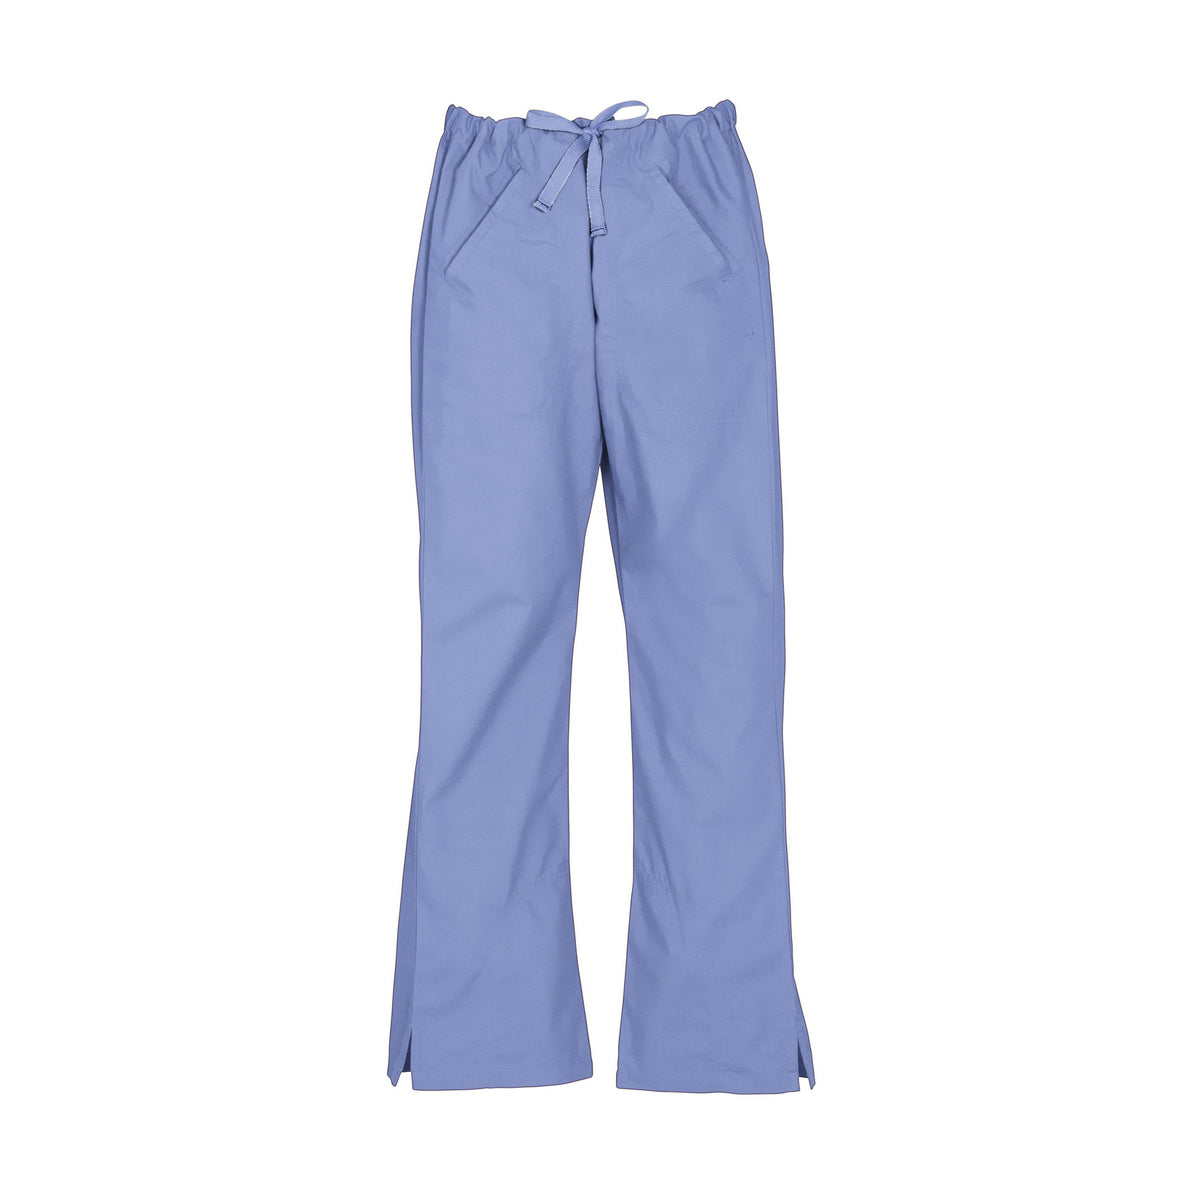 Buy Biz Collection Ladies Classic Scrubs Bootleg Pants - H10620 Online ...